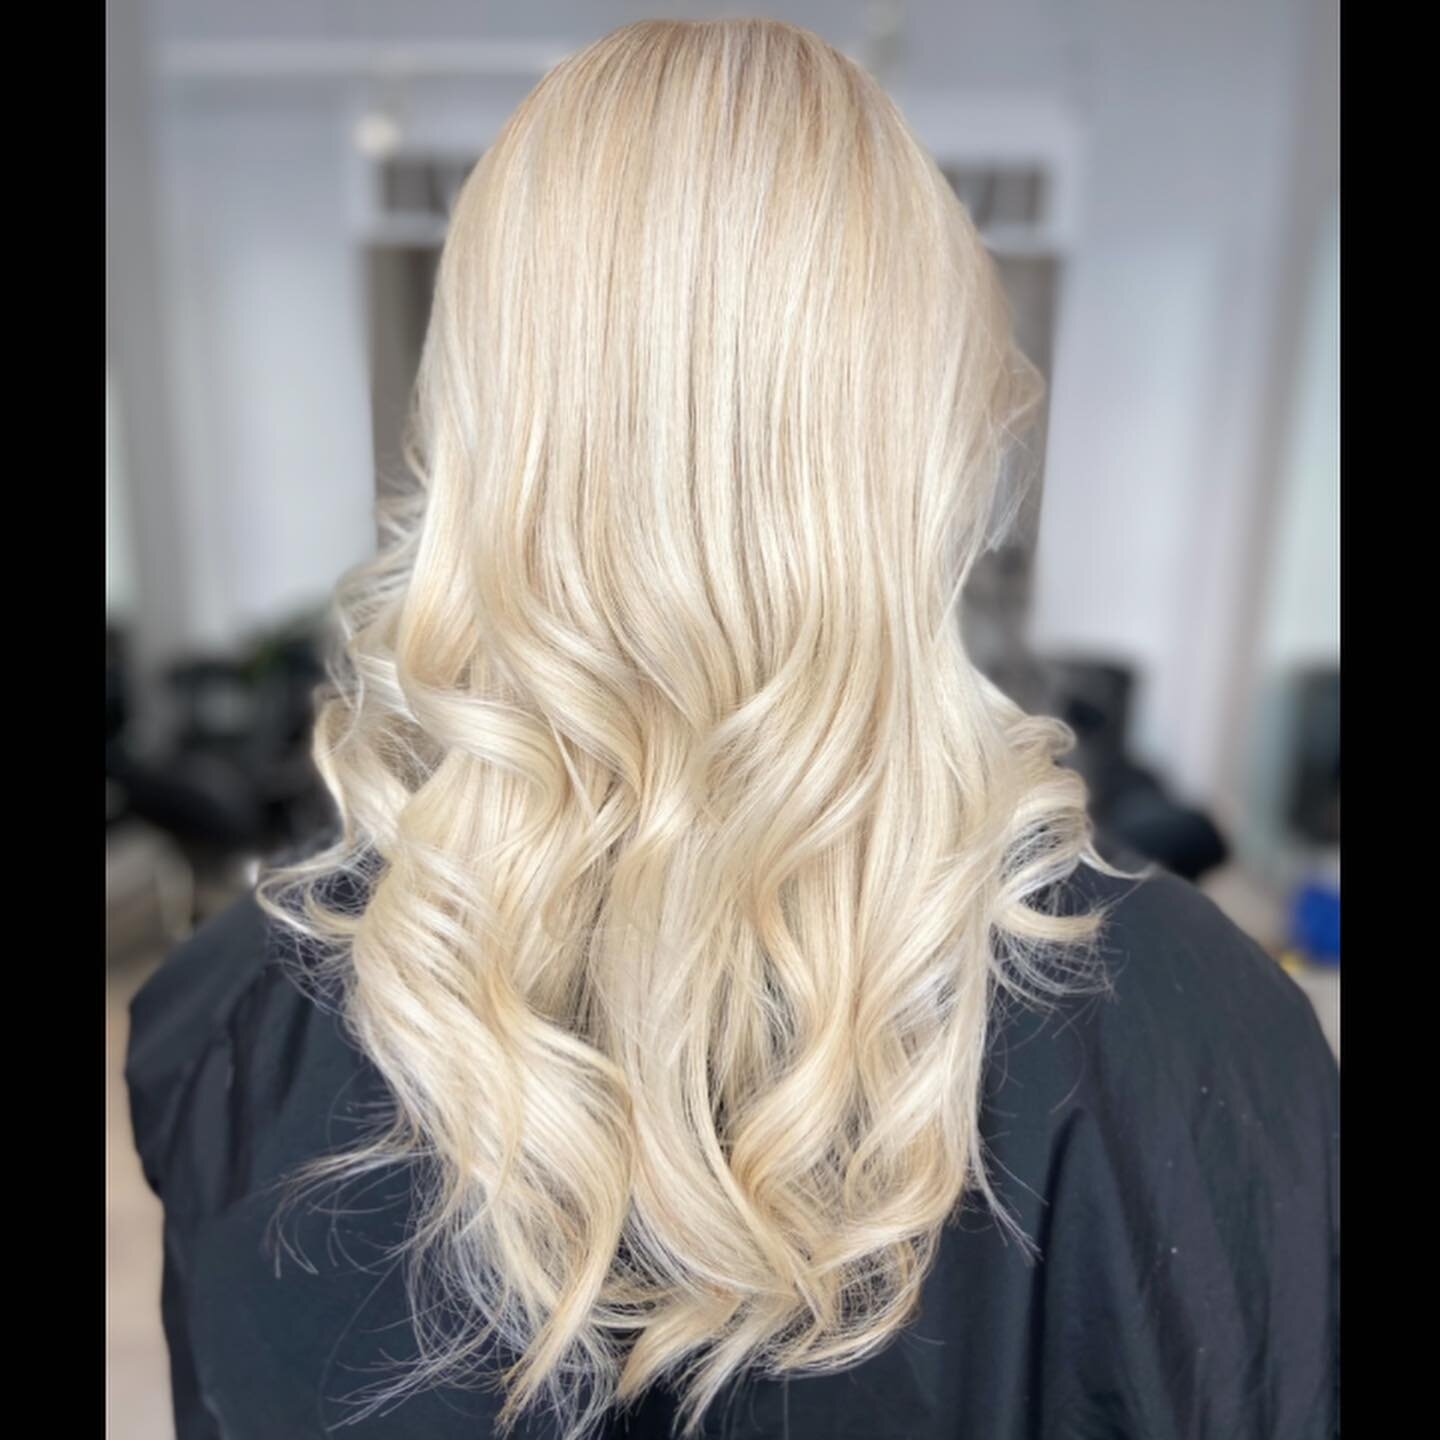 Gl&ouml;m inte och boka in din tid innan sommarn ☀️🌸

#fris&ouml;rstockholm #hair #wella #color #mariatorget
#olaplexsweden #balayage #babylights #blond #blondehair #herrklippning #s&ouml;dermalm #fris&ouml;r #hornsgatan #highlights #haircolor #h&ar